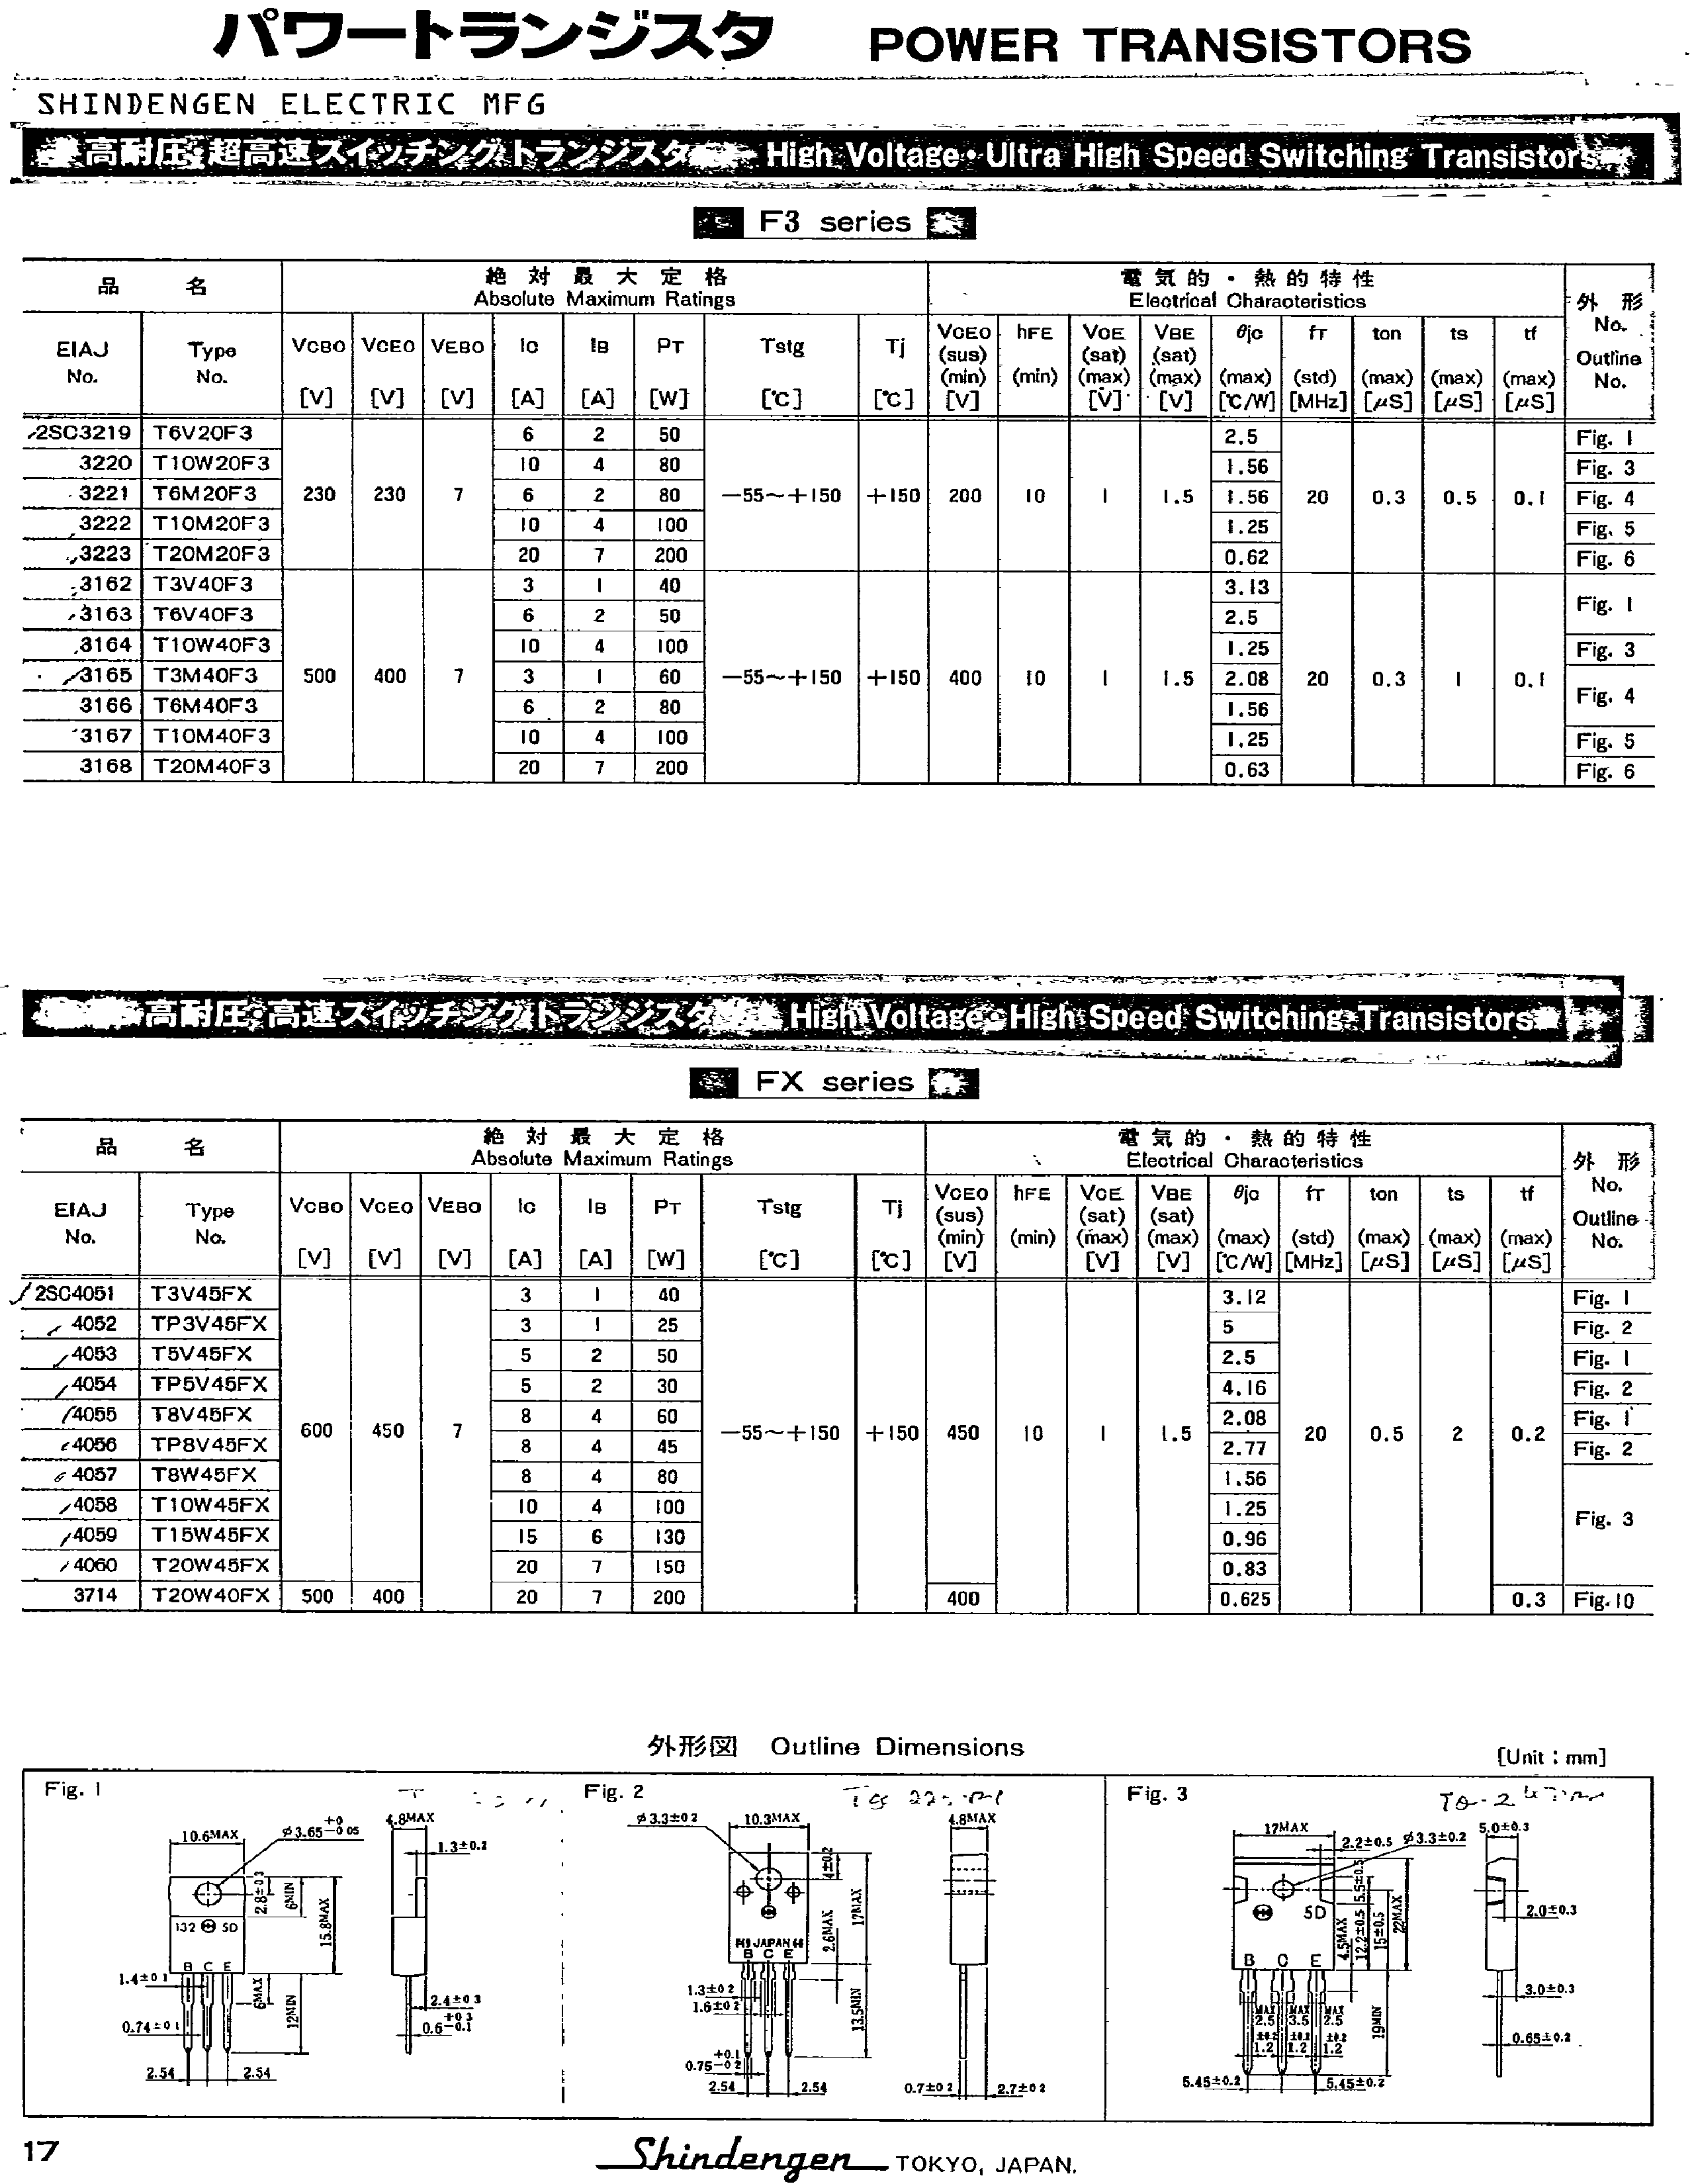 2SC3220 Shindengen Electric Mfg.Co.Ltd